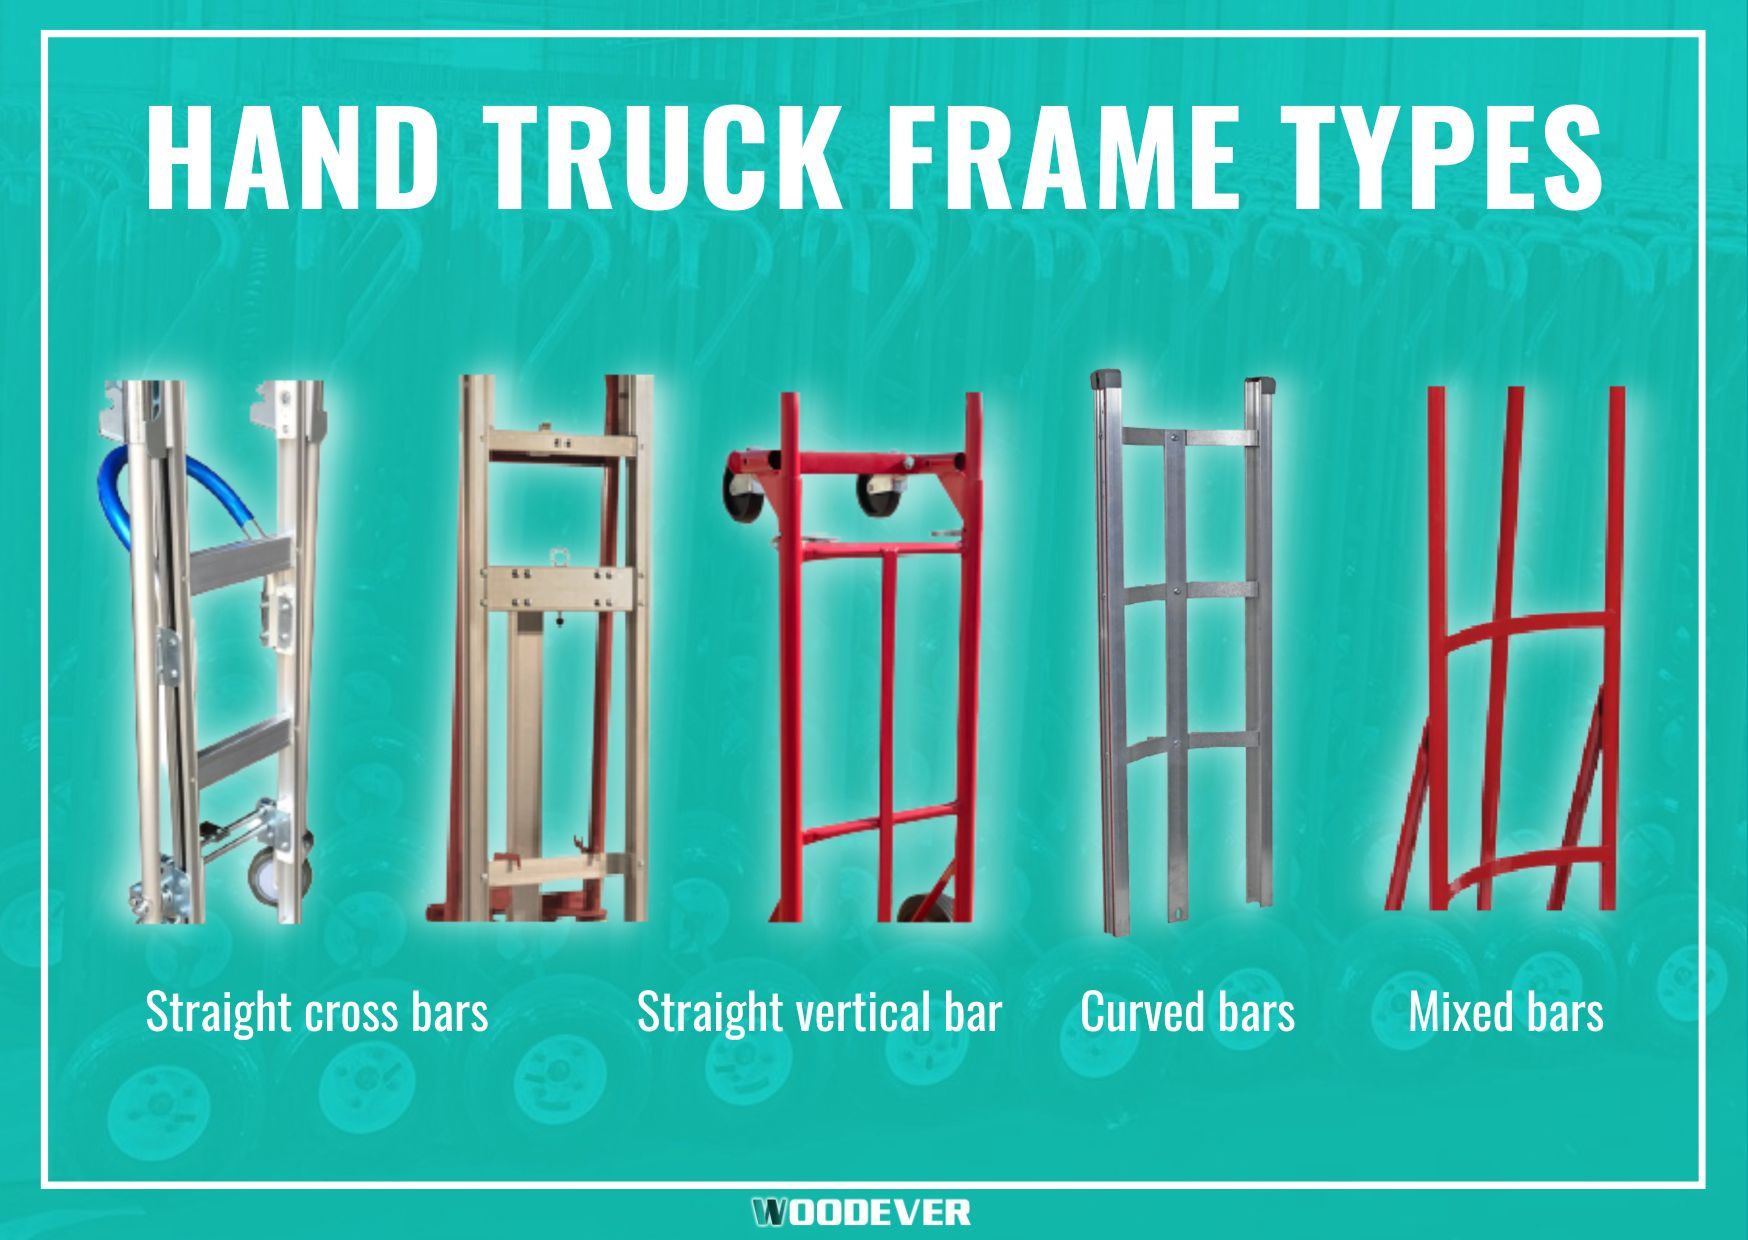 Common types of frame for hand truck, dolly cart: steel frame, aluminum frame, curved frame